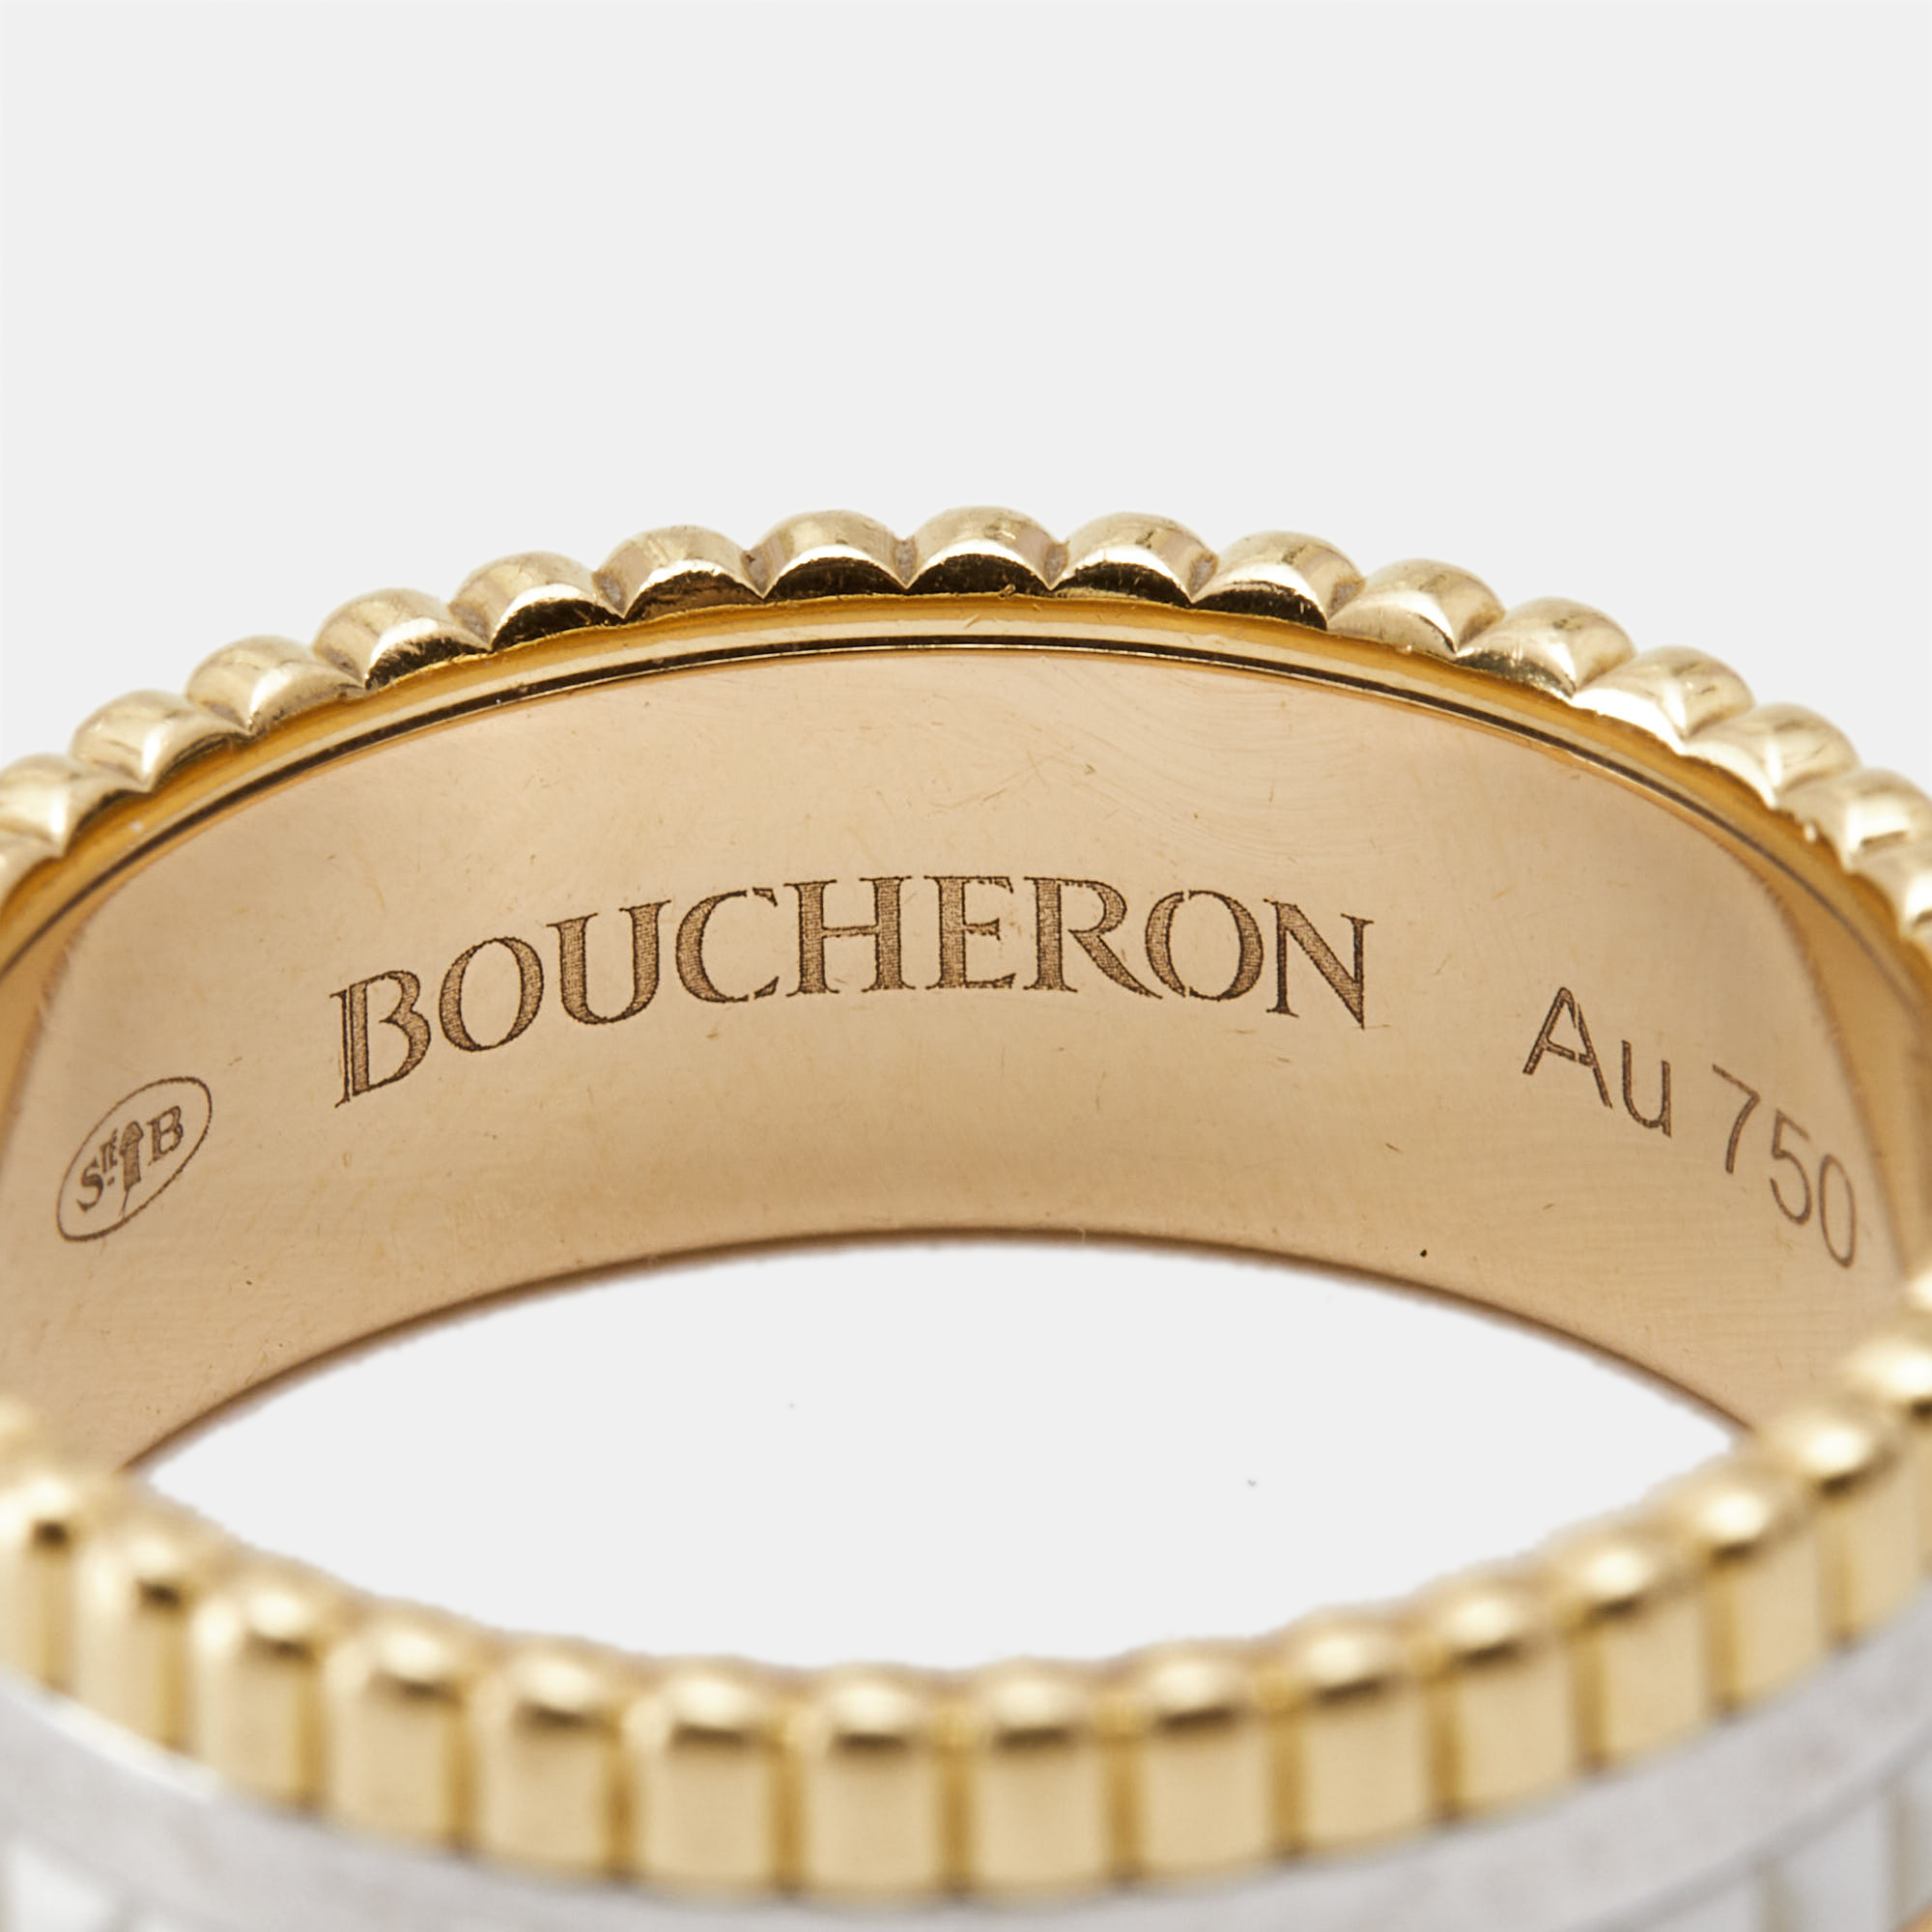 Boucheron Quatre Classique White Edition Ceramic 18k Three Tone Gold Ring Size 52